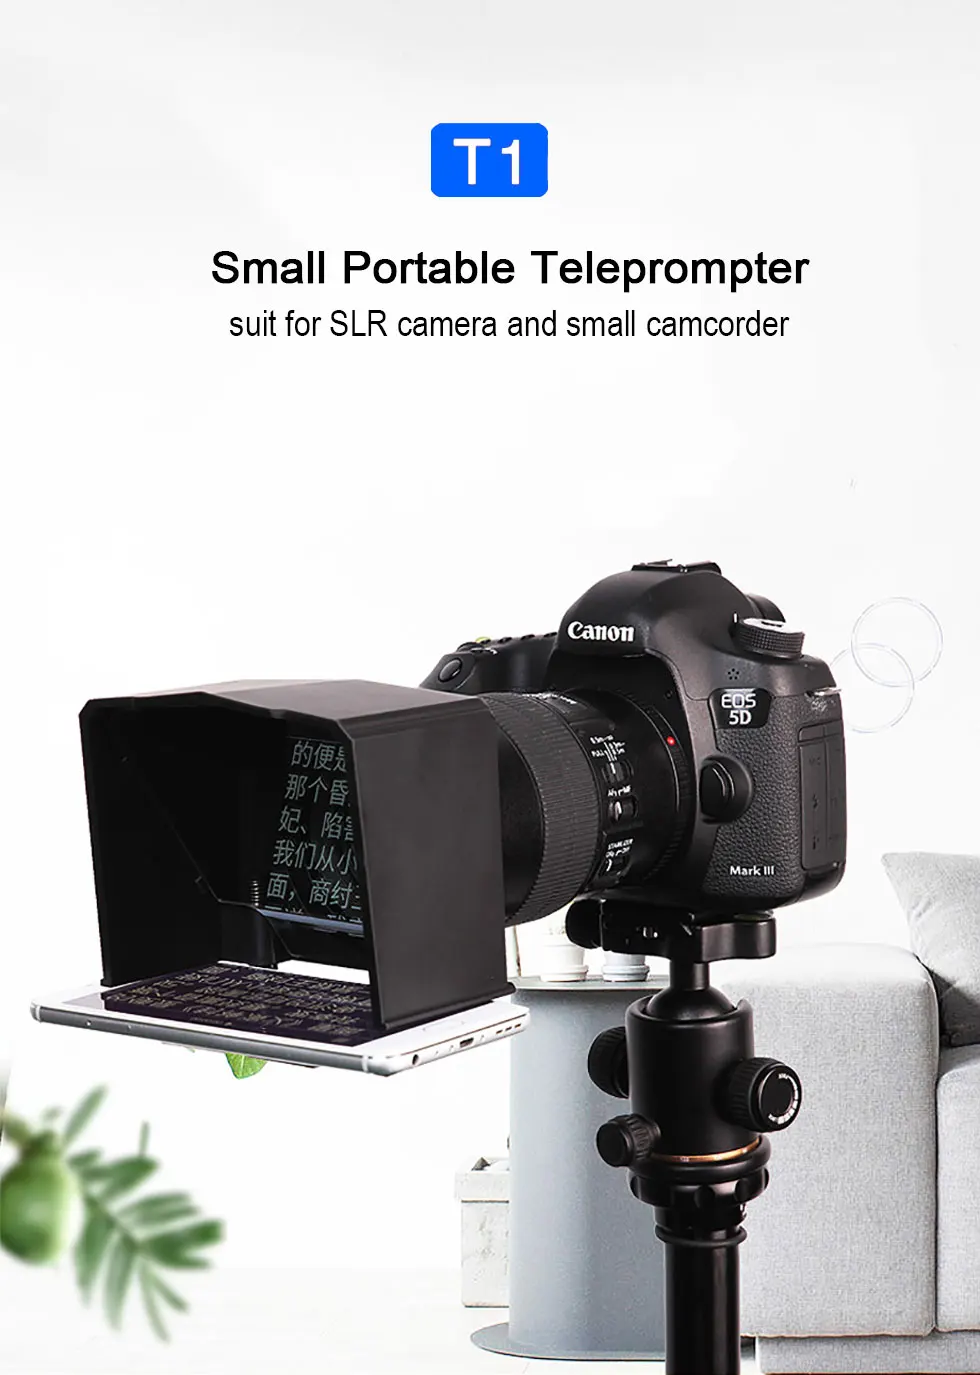 Bestview T1 Portable Phone Teleprompter for Interview Speech Video Teaching UK 